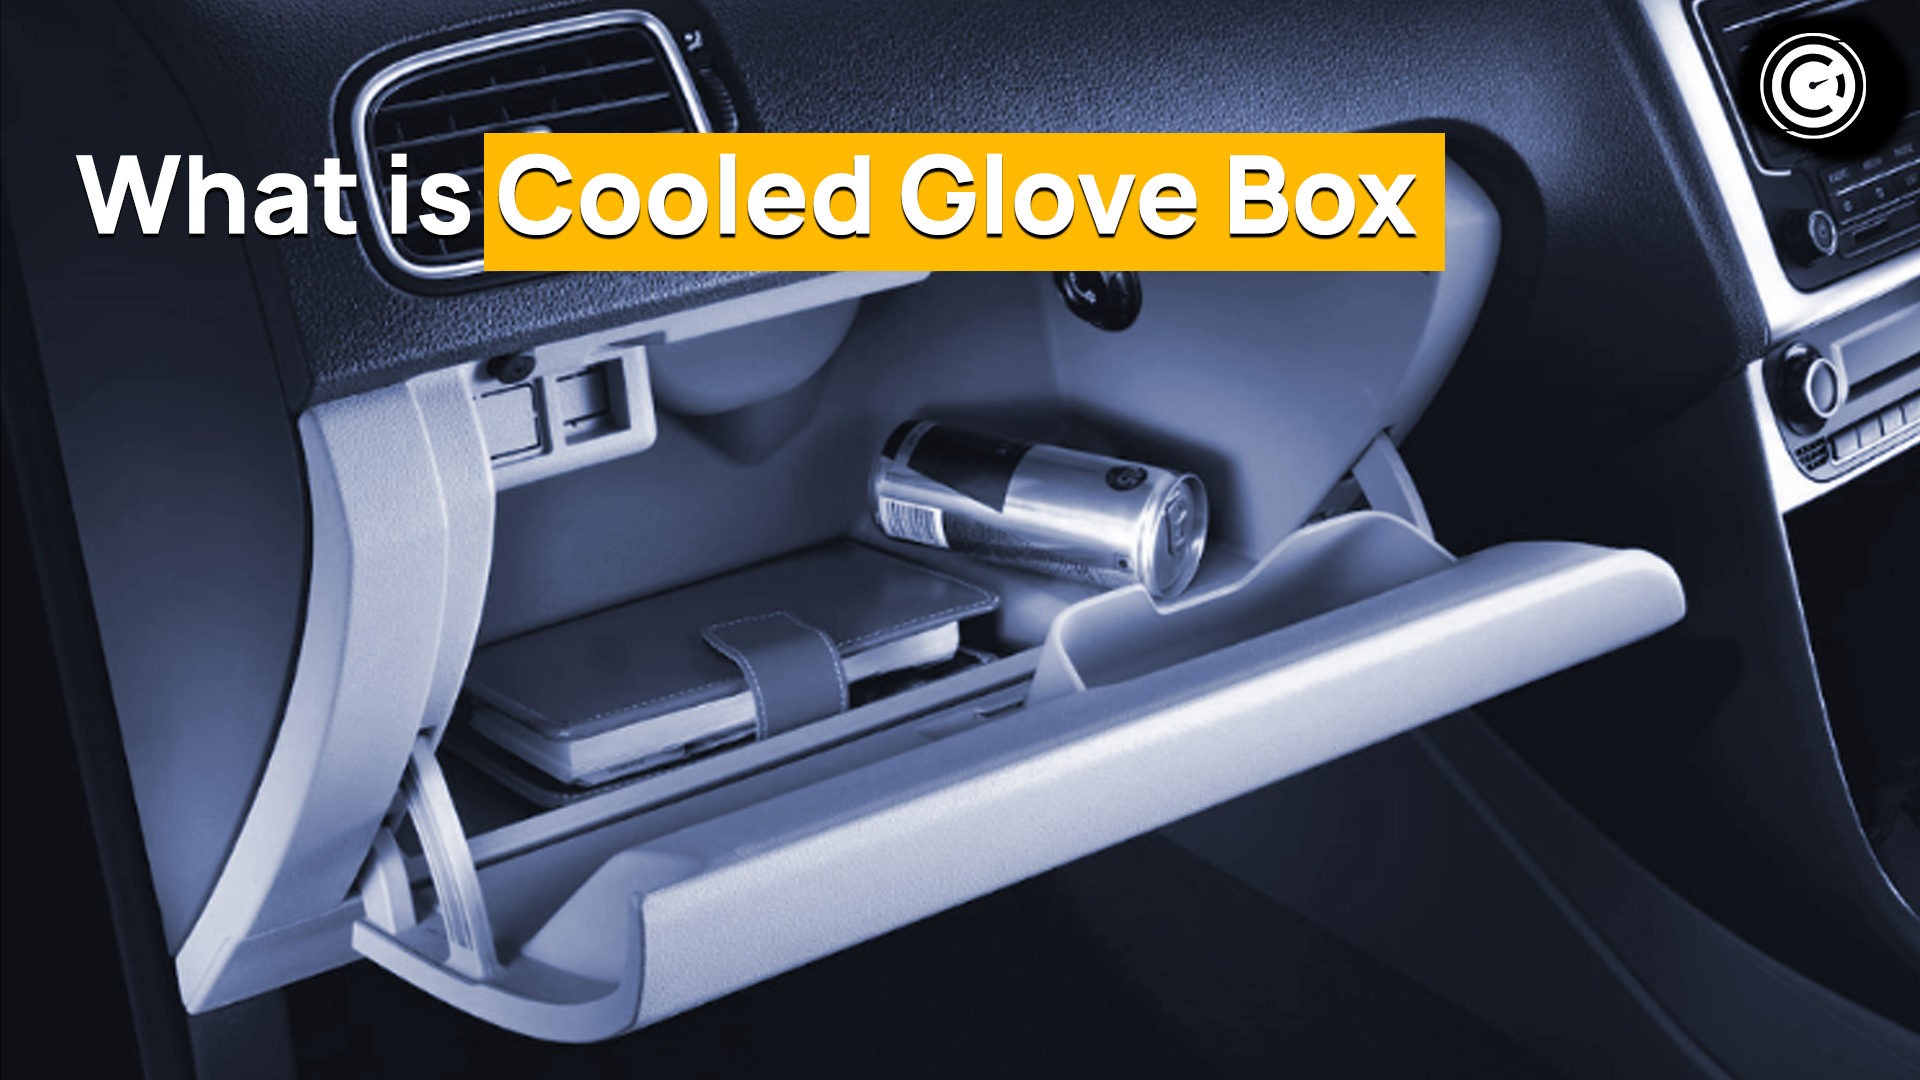 cooled glove box